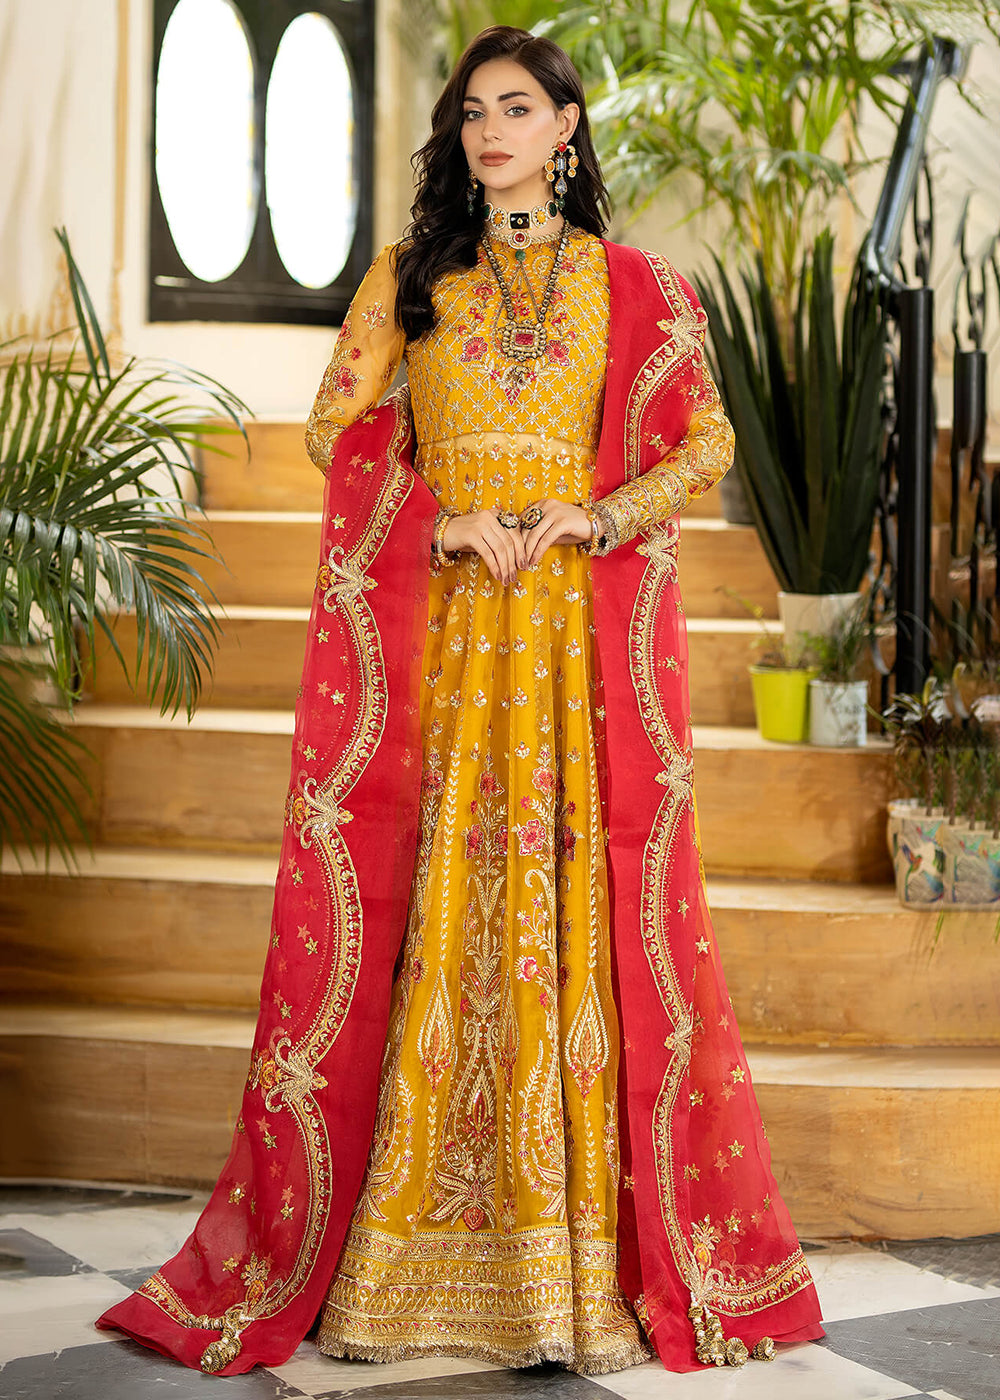 Buy Front Slit Yellow Anarkali - Wedding Wear Anarkali Suit